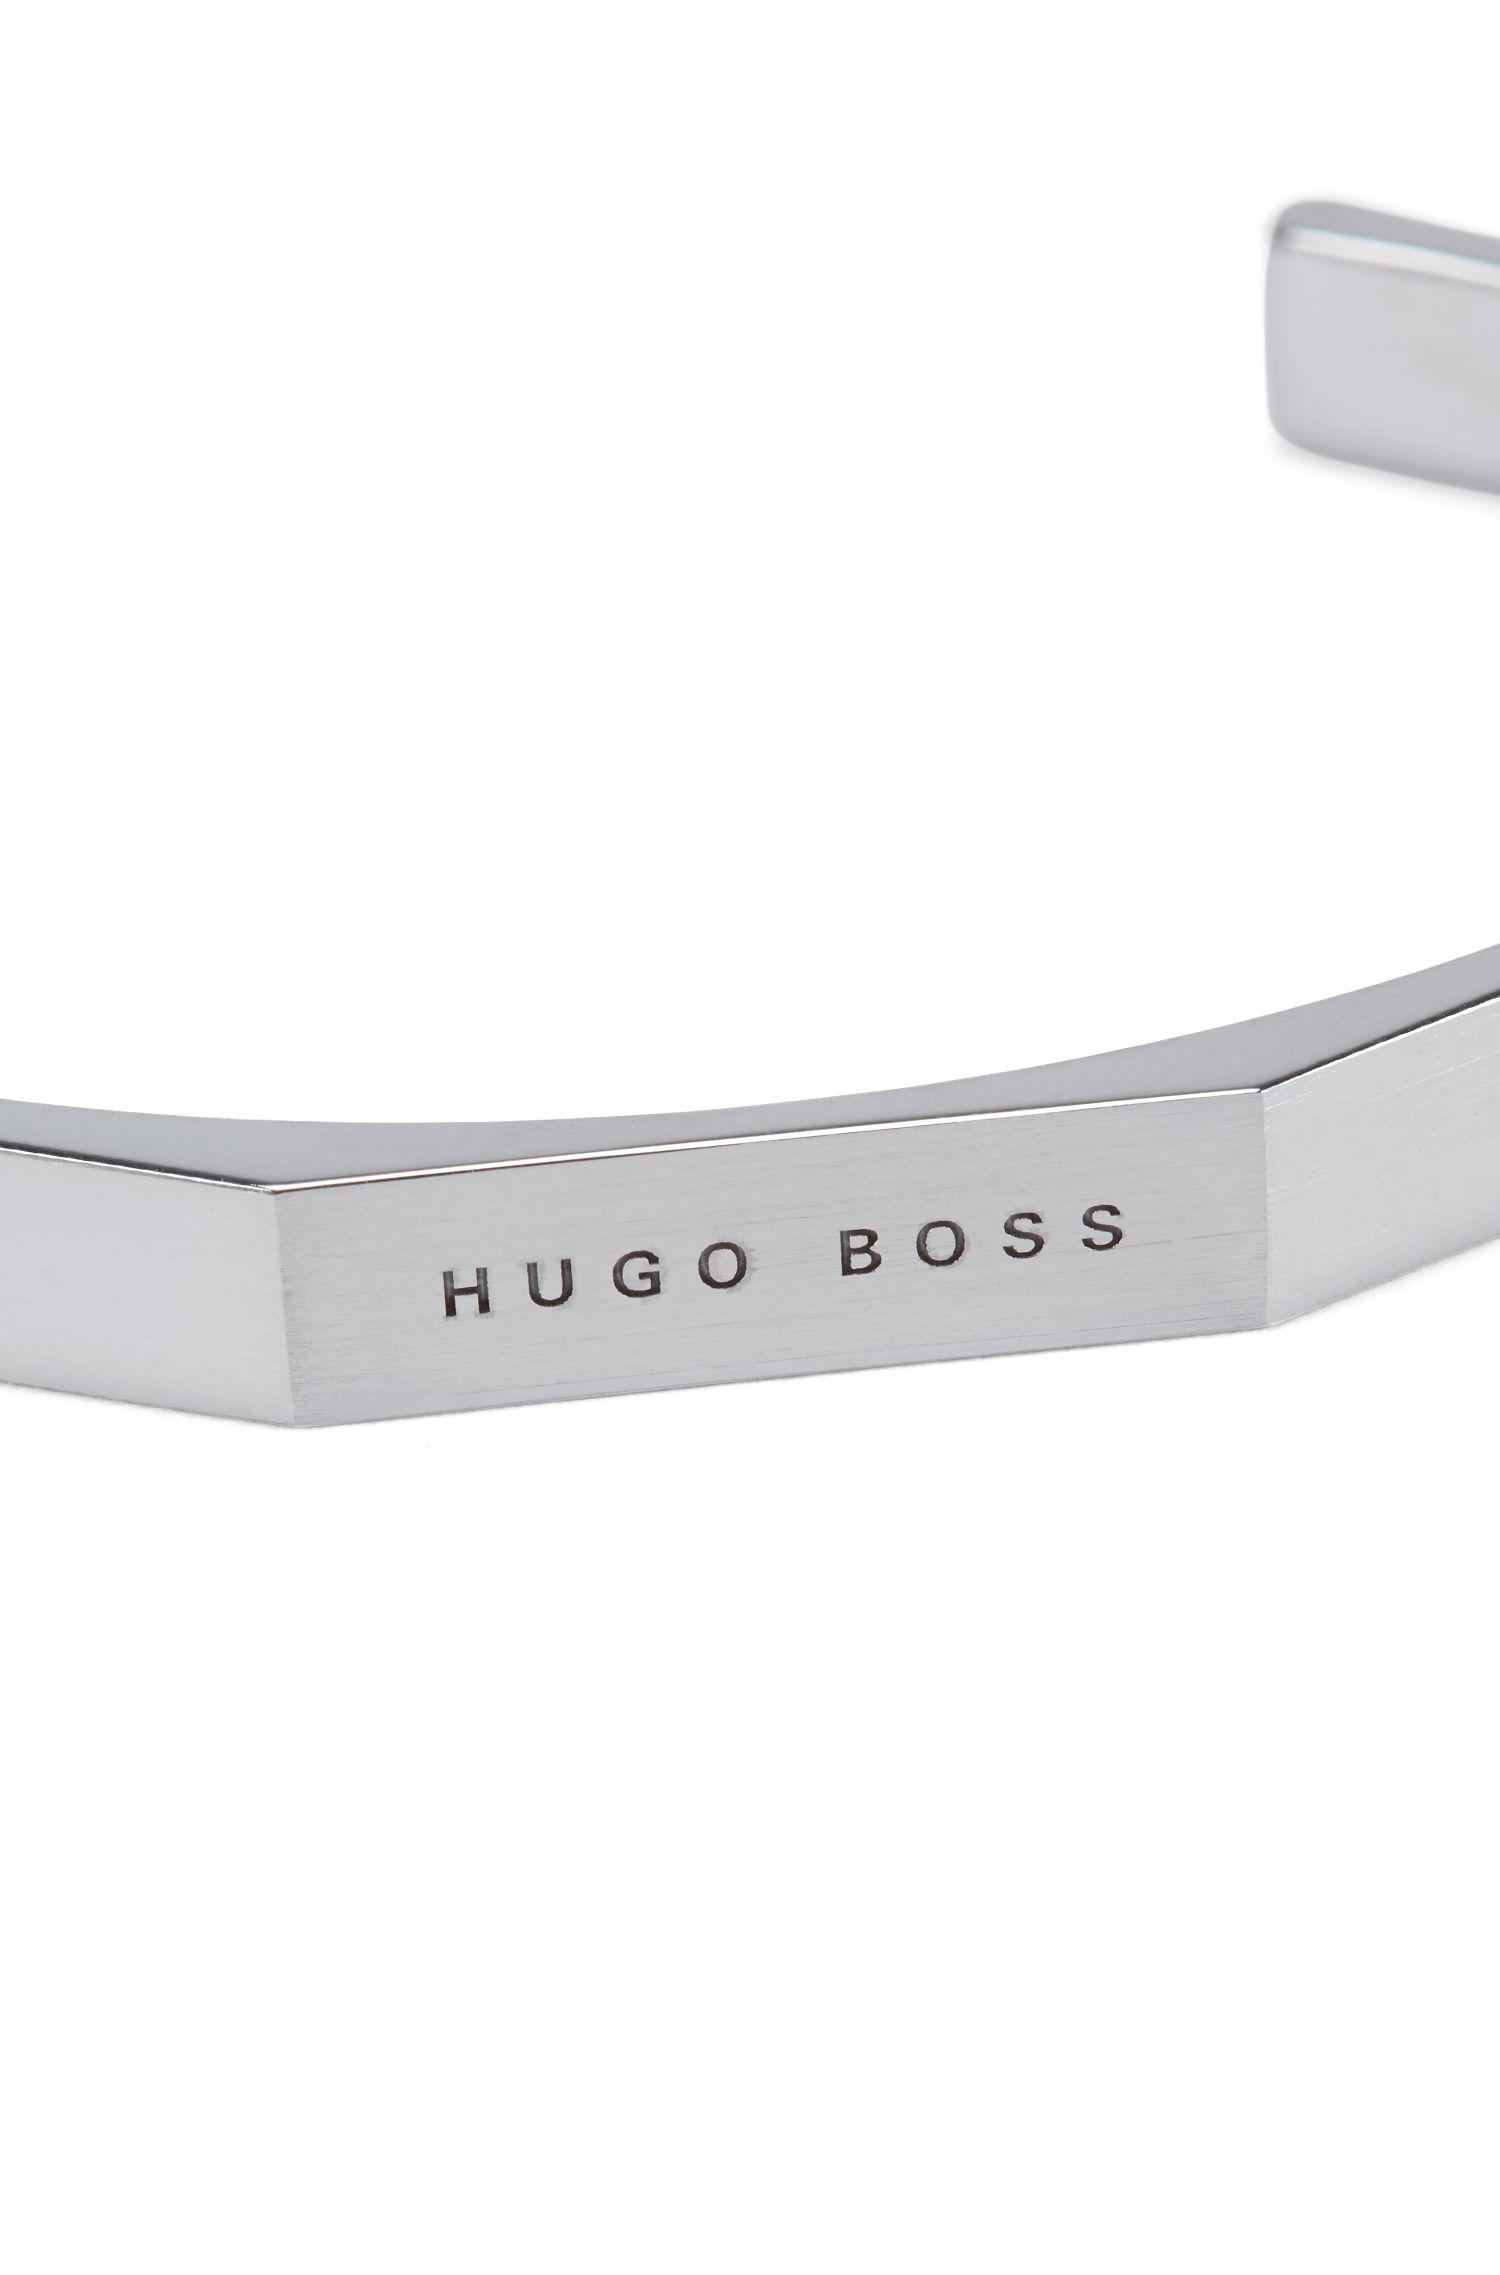 Hugo Boss Silver Bracelet Clearance Sale, UP TO 70% OFF | www.ldeventos.com